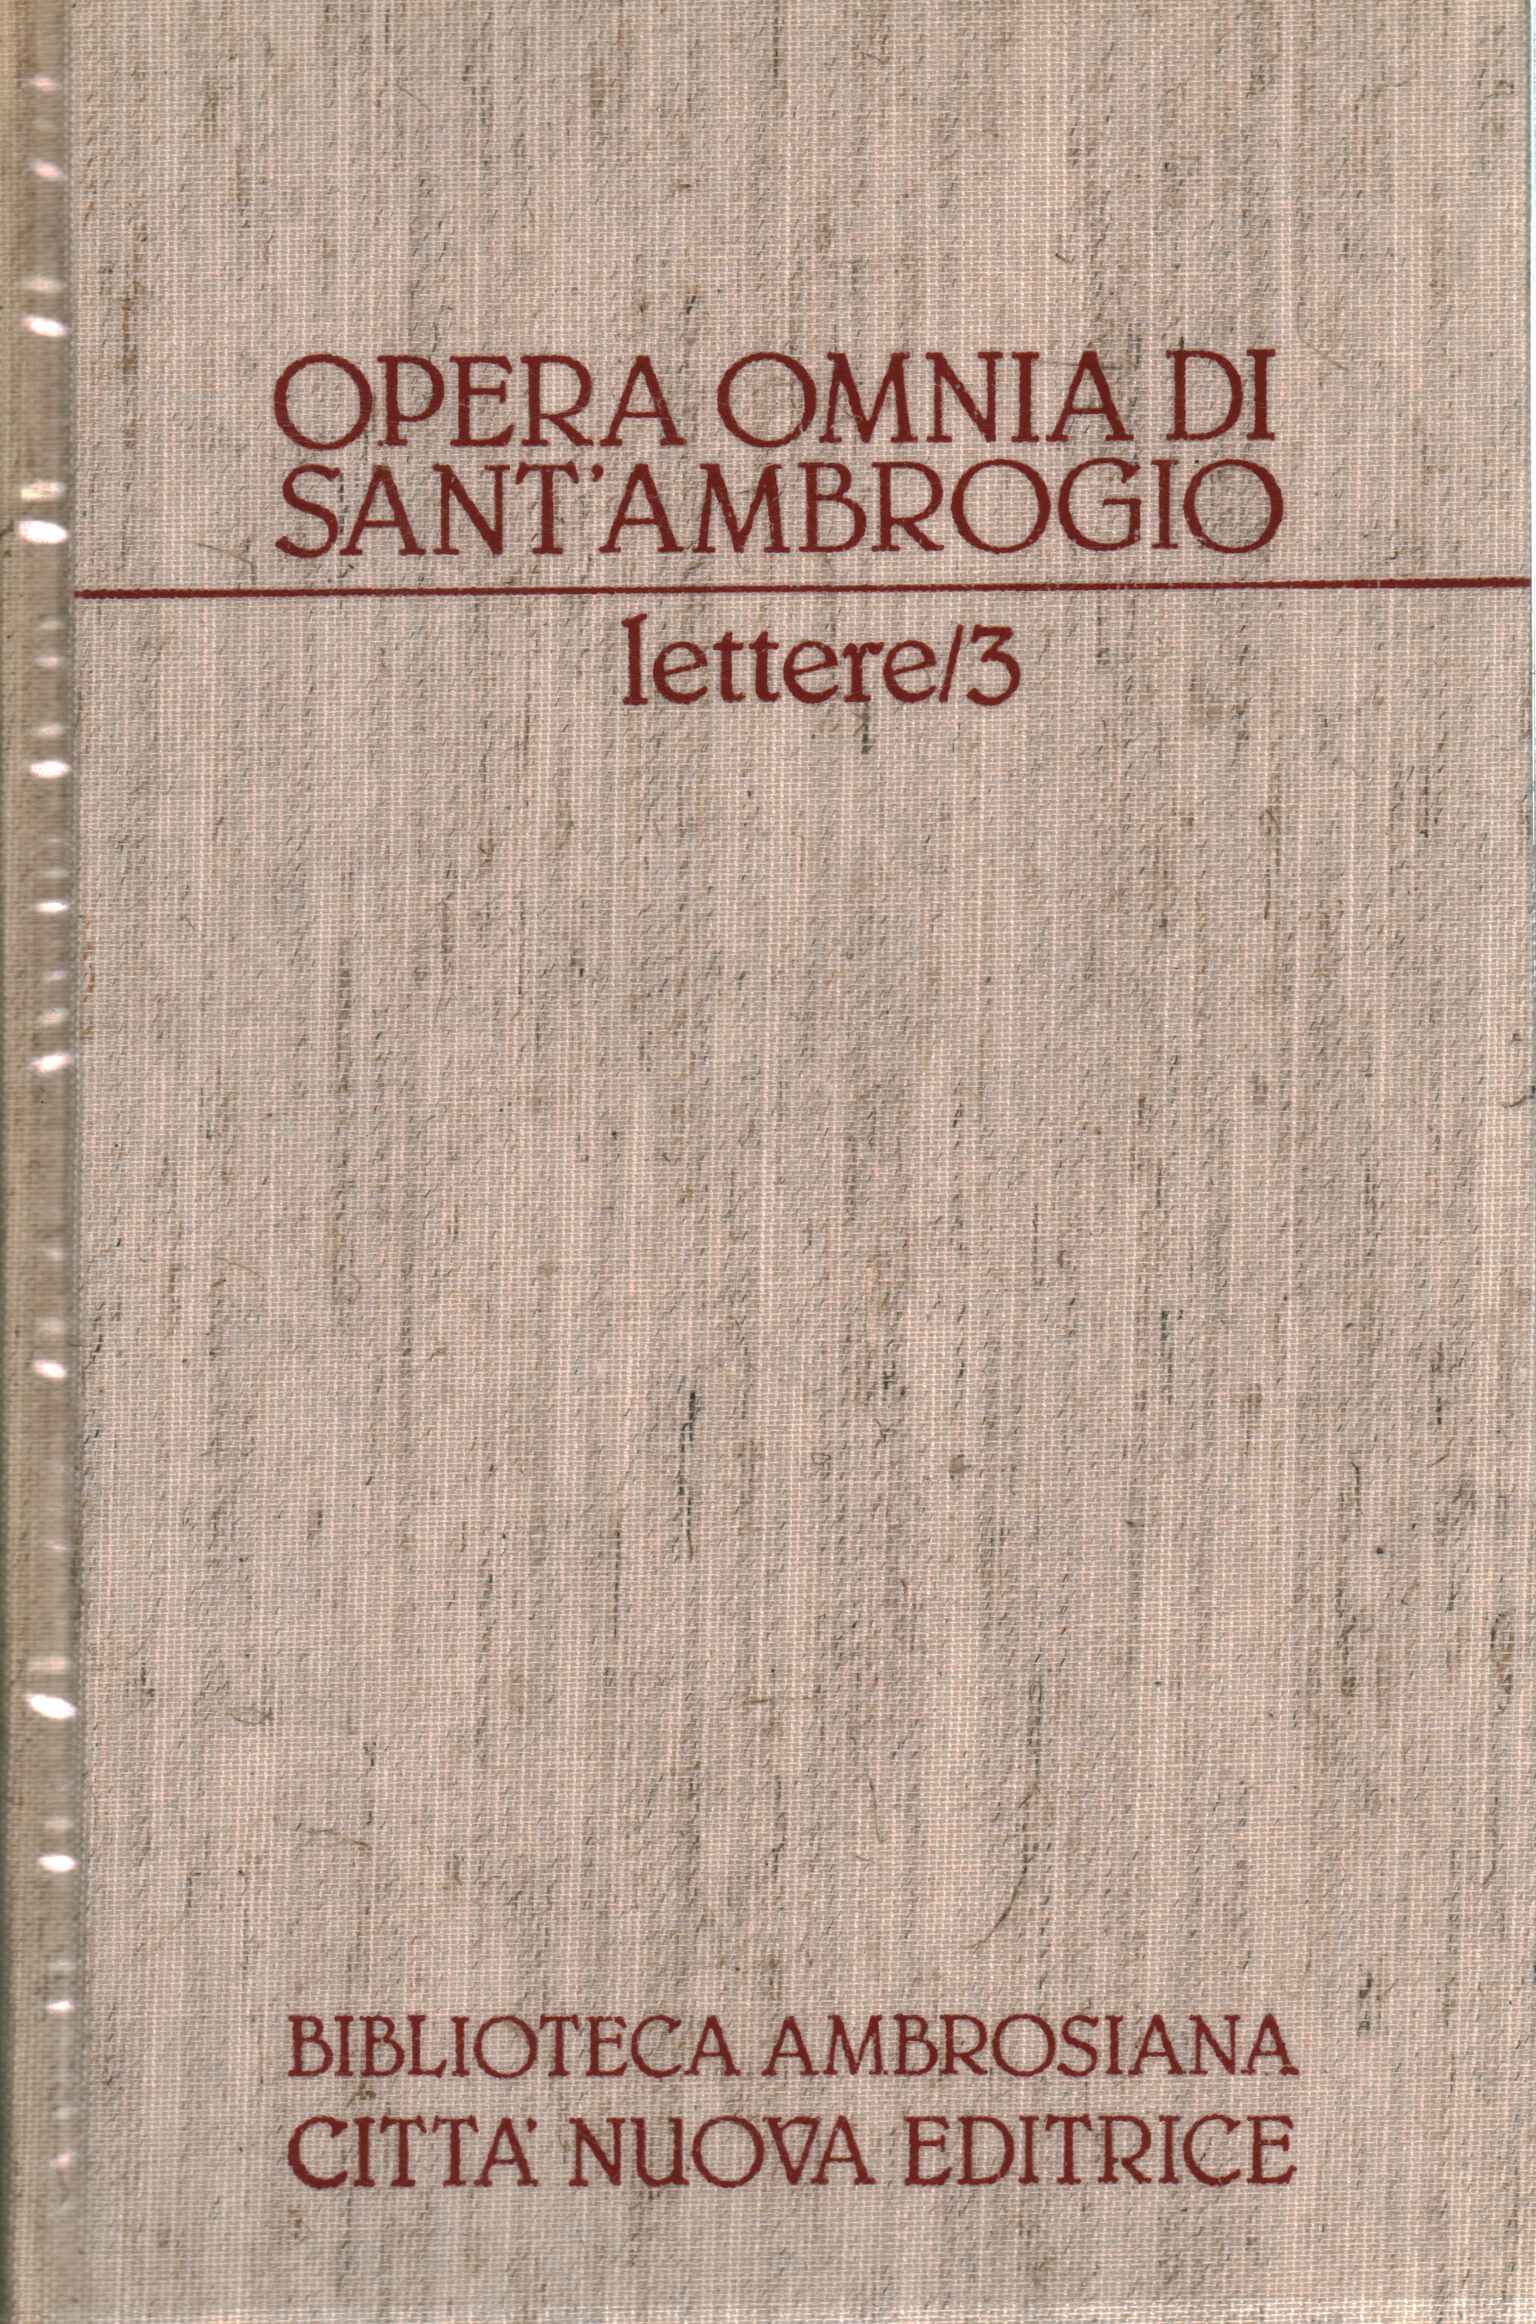 Opera Omnia of Sant'Ambrogio. D